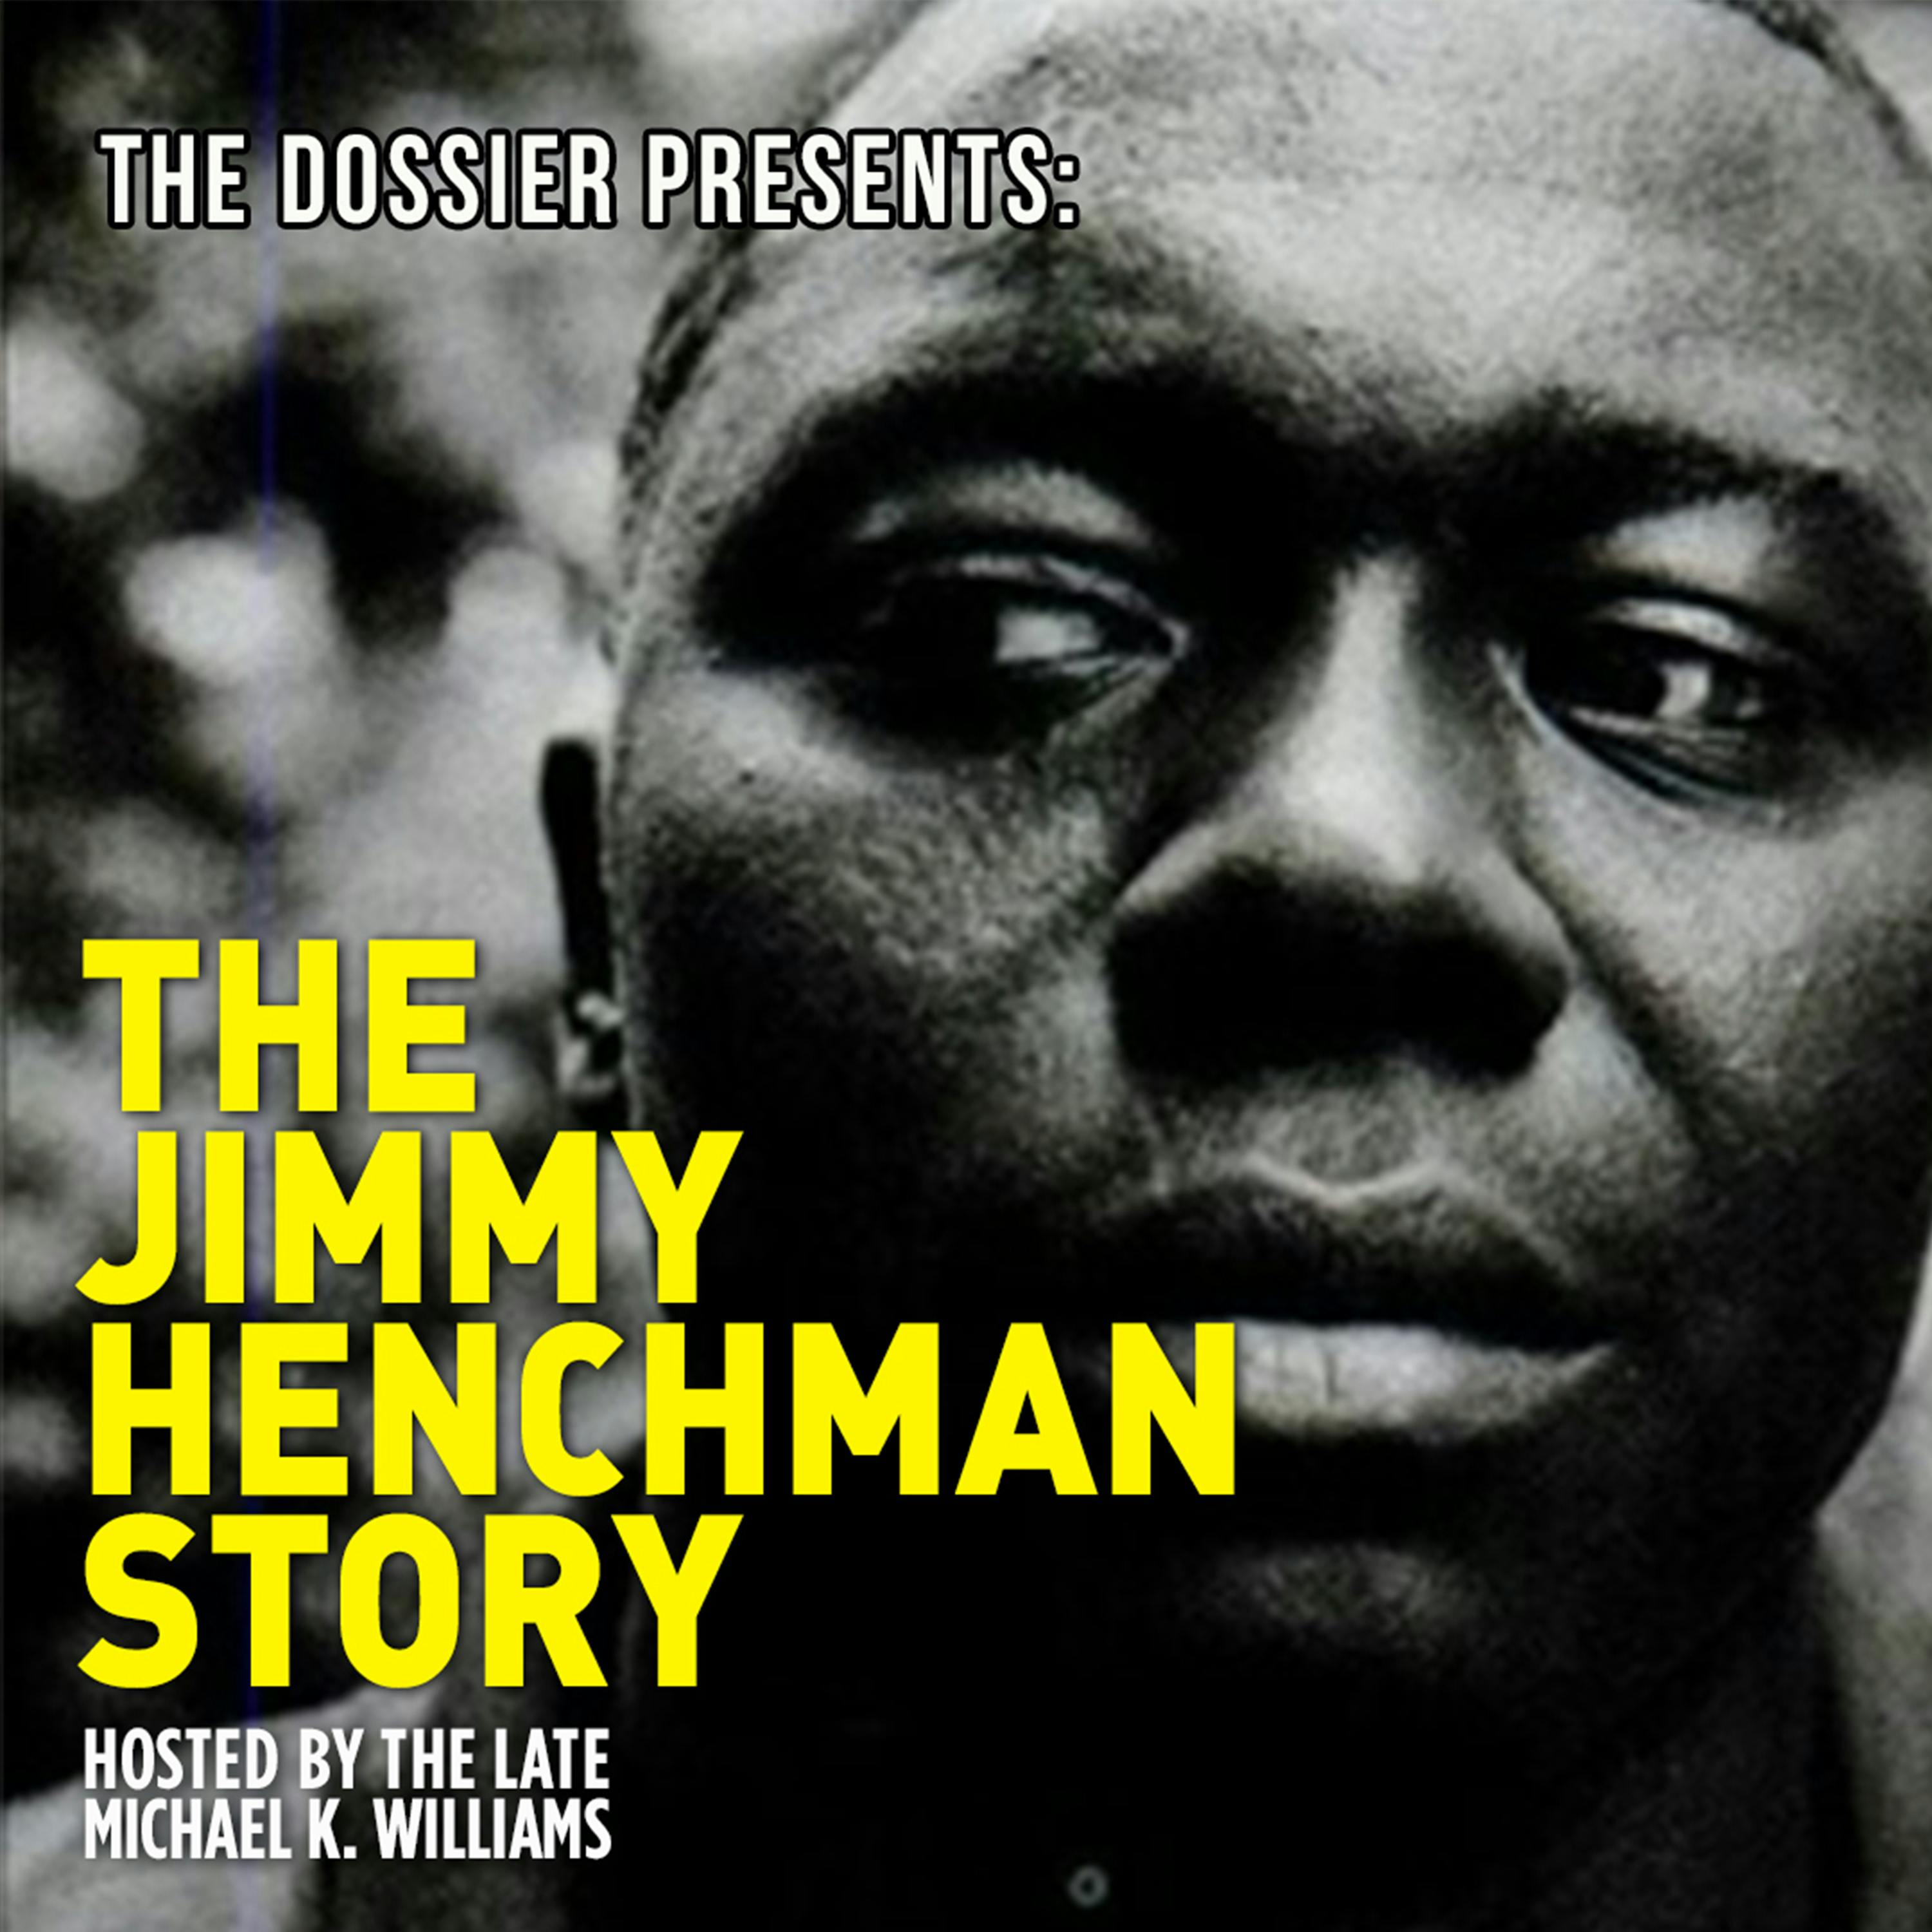 THE JIMMY HENCHMAN STORY - EP. 11 - MIC DROP